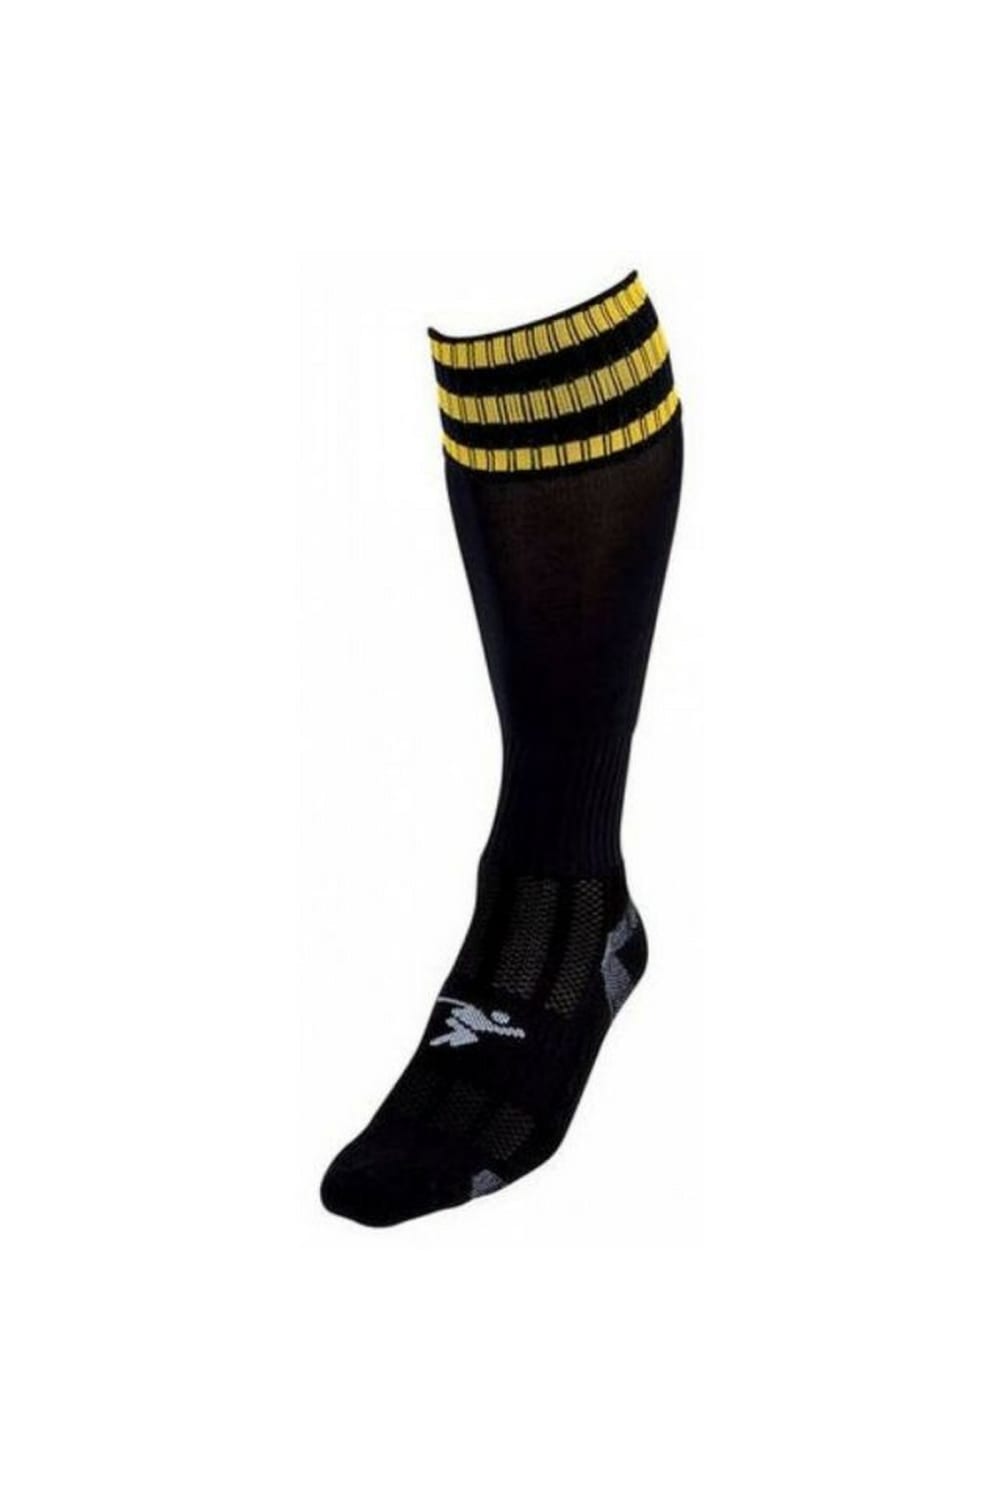 Precision Unisex Adult Pro Football Socks (Black/Gold)